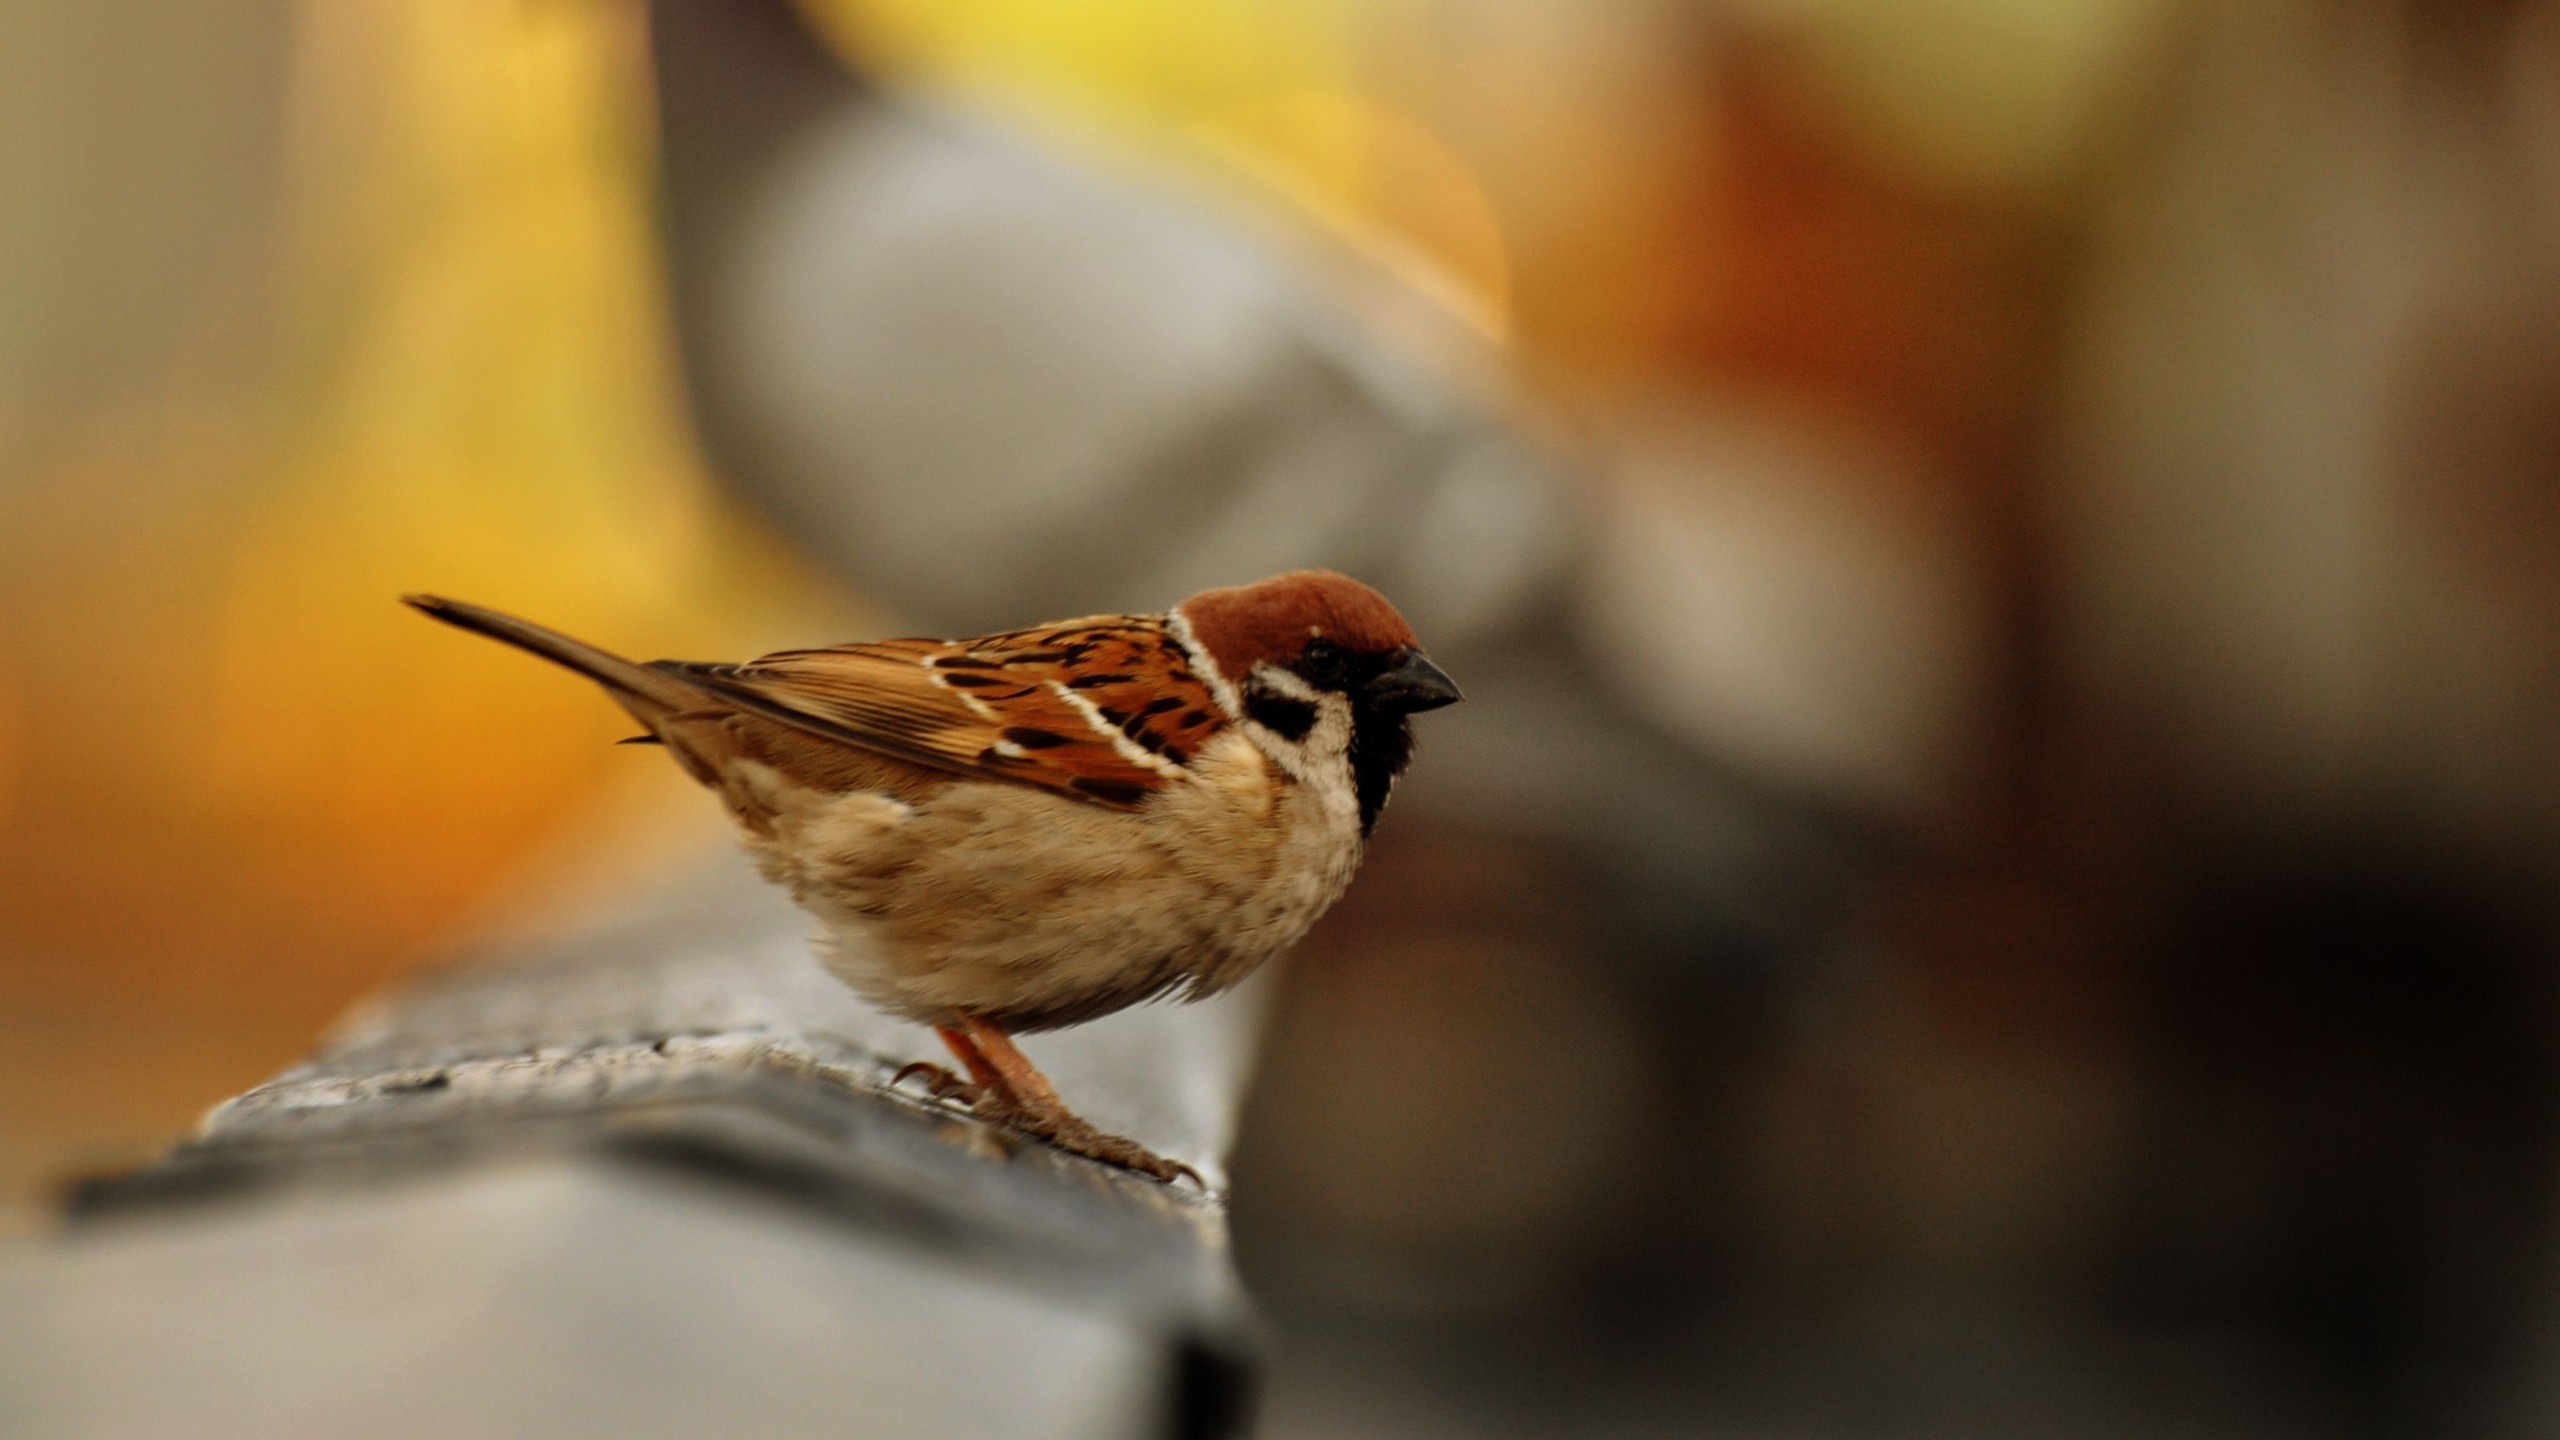 General 2560x1440 birds sparrow depth of field animals brown